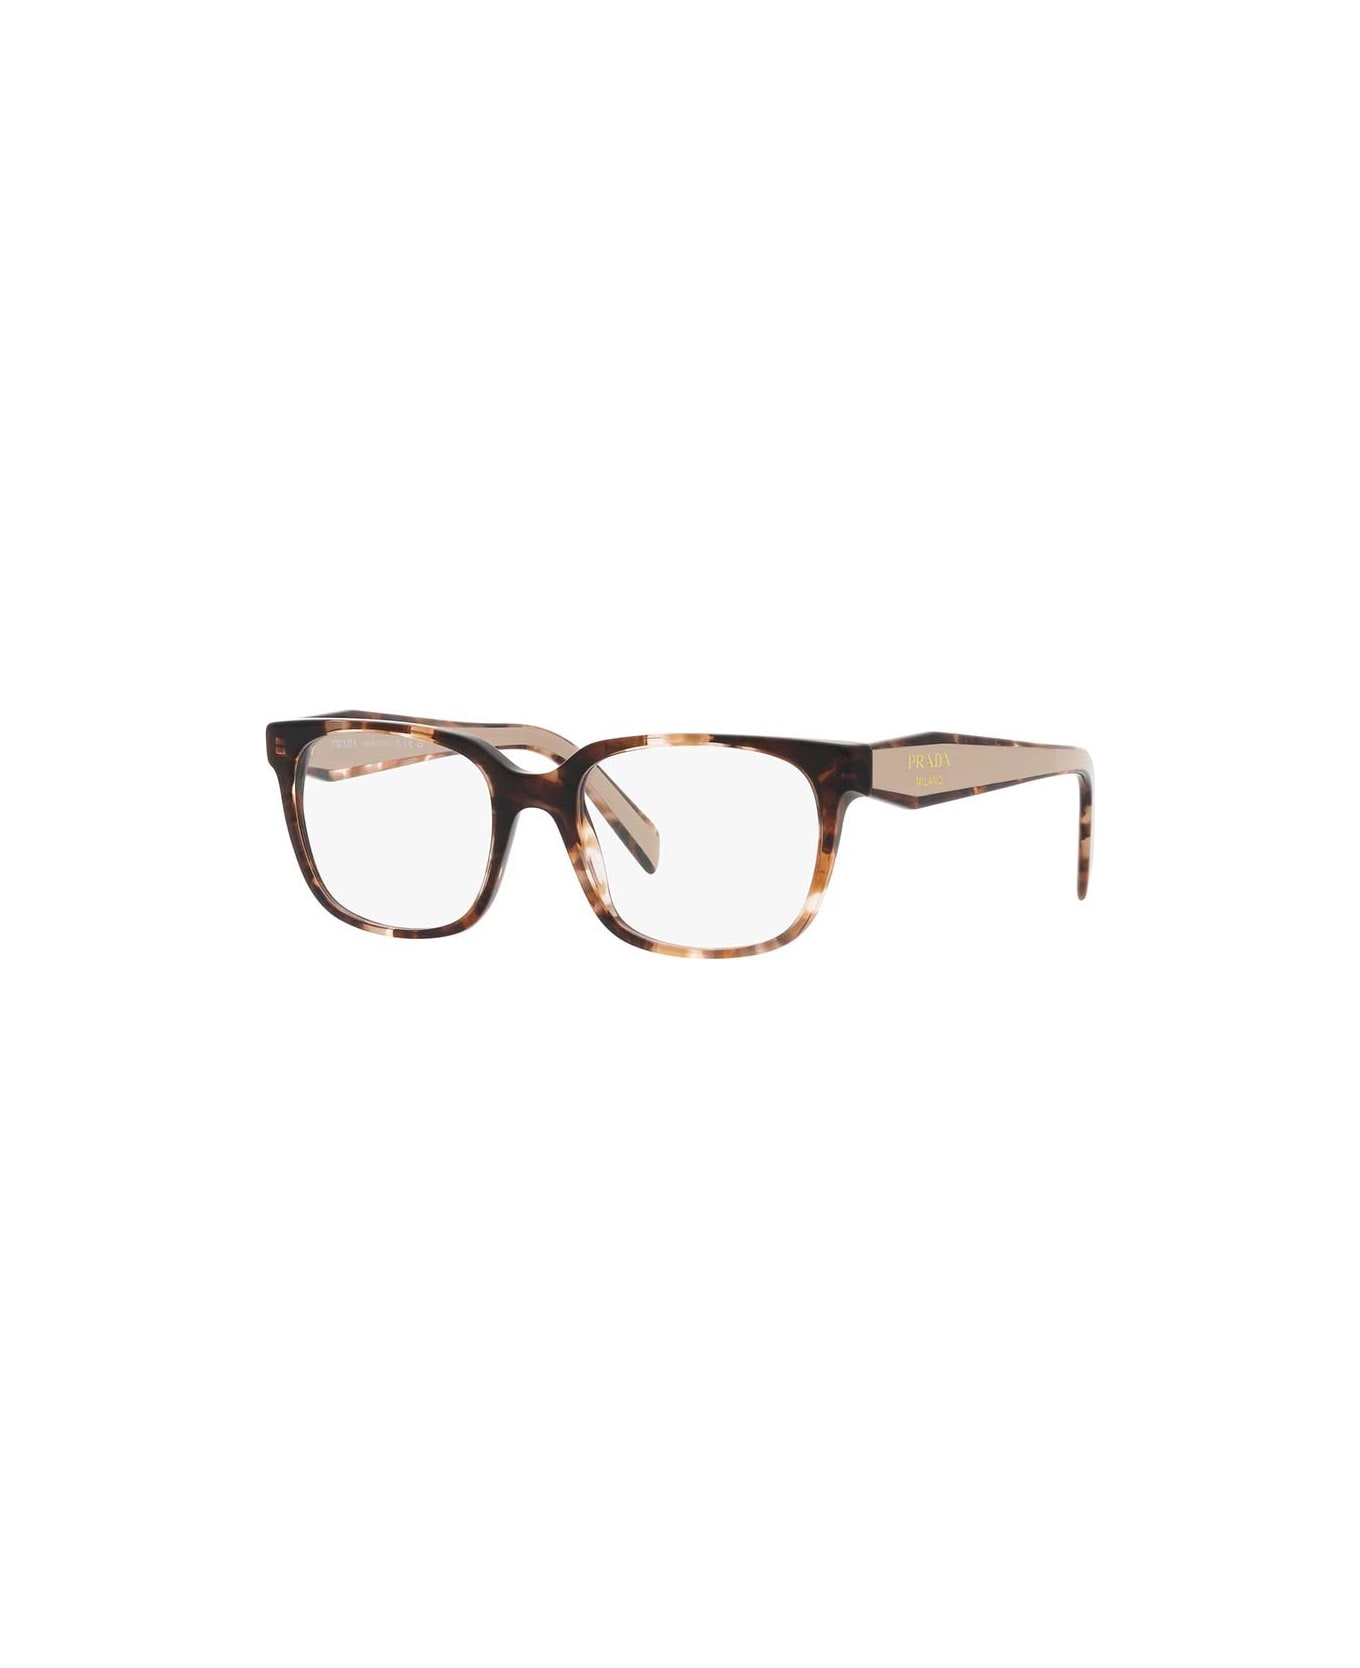 Prada Eyewear Glasses - 07R1O1 アイウェア